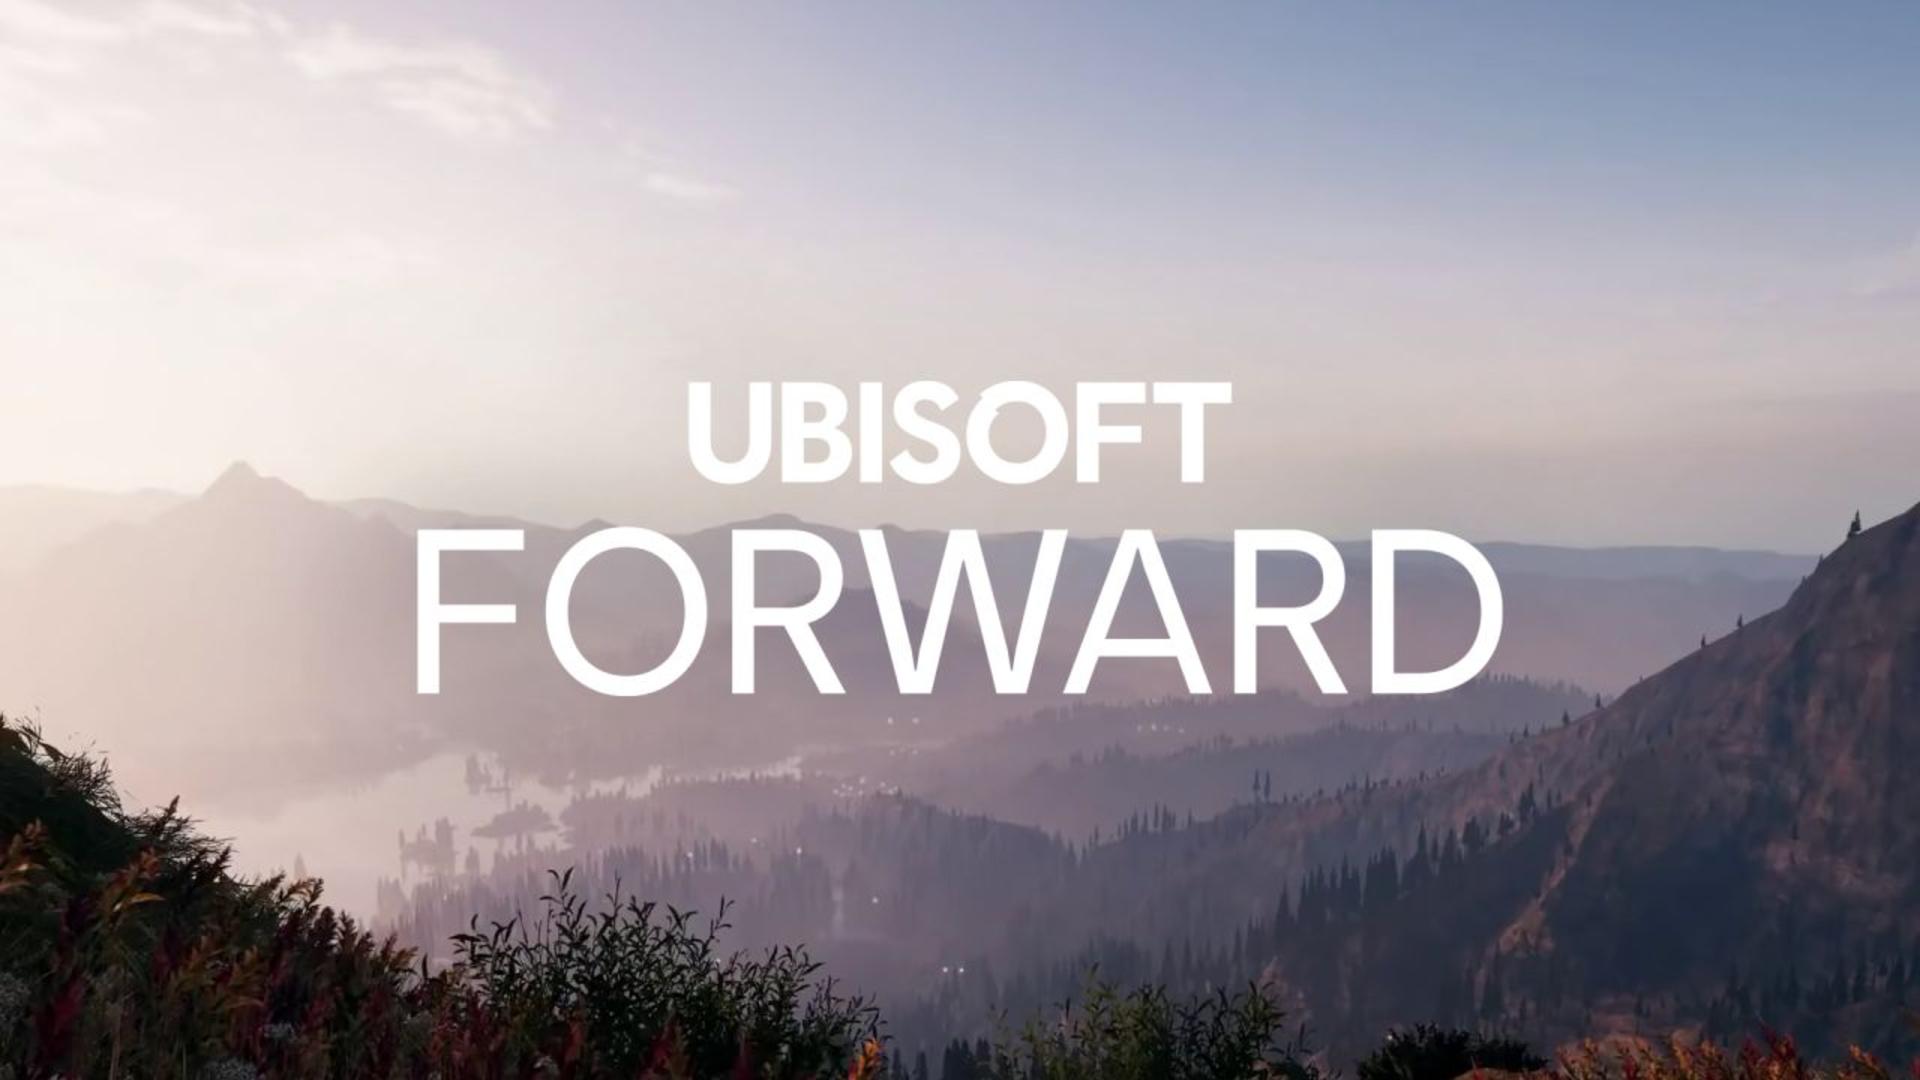 Ubisoft forward será o evento online em julho | f19f21a1 ubisoft forward | married games horror | horror | ubisoft forward